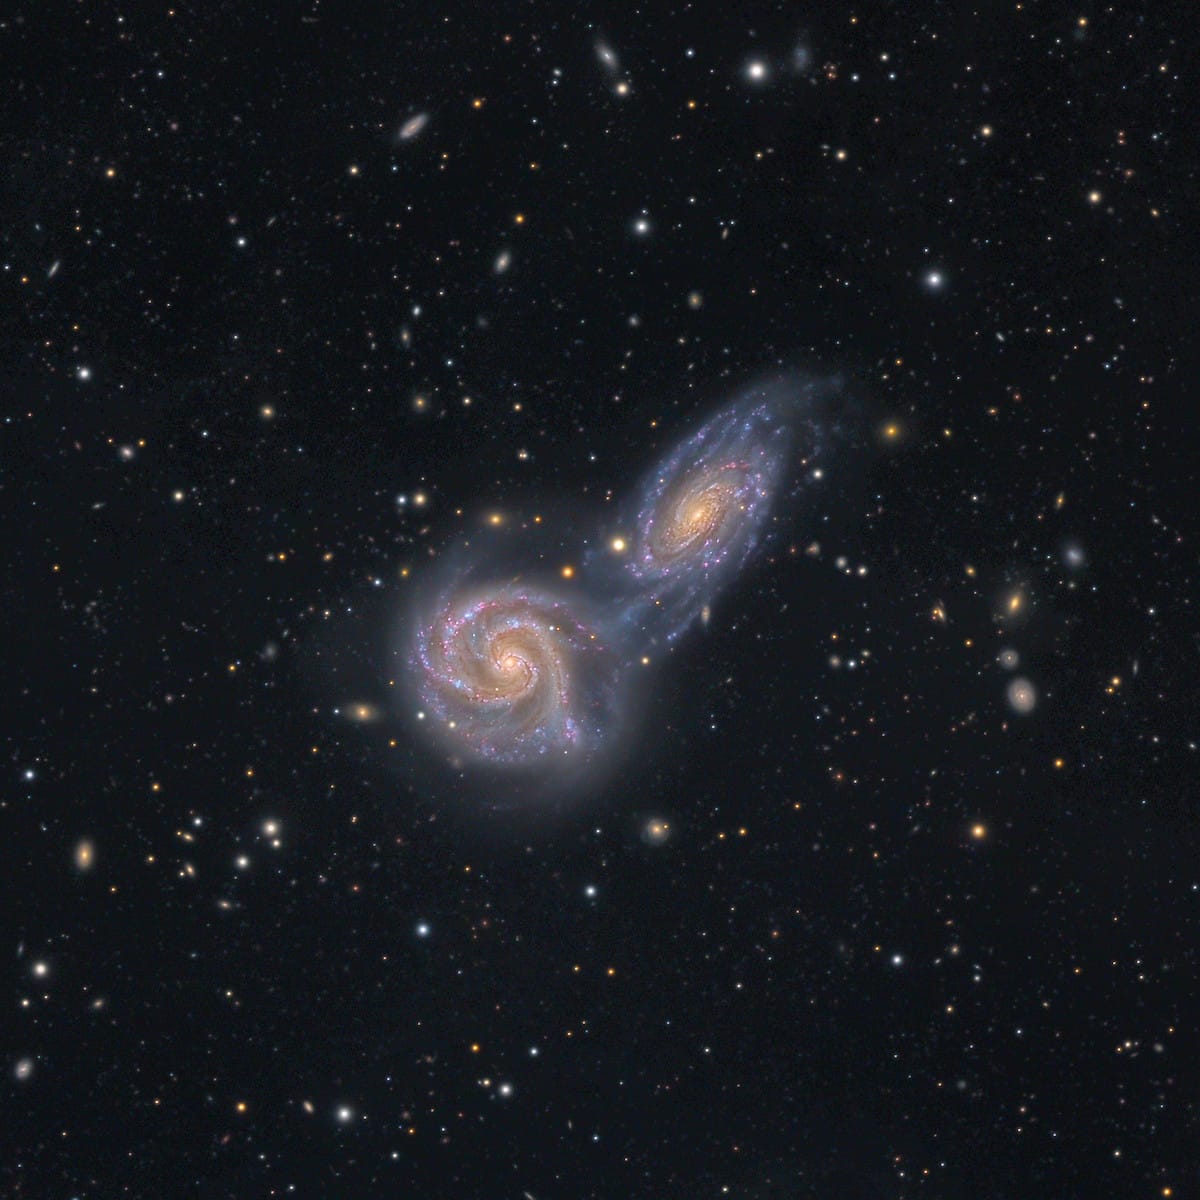 NGC 5426 and NGC 5427 Spiral Galaxies